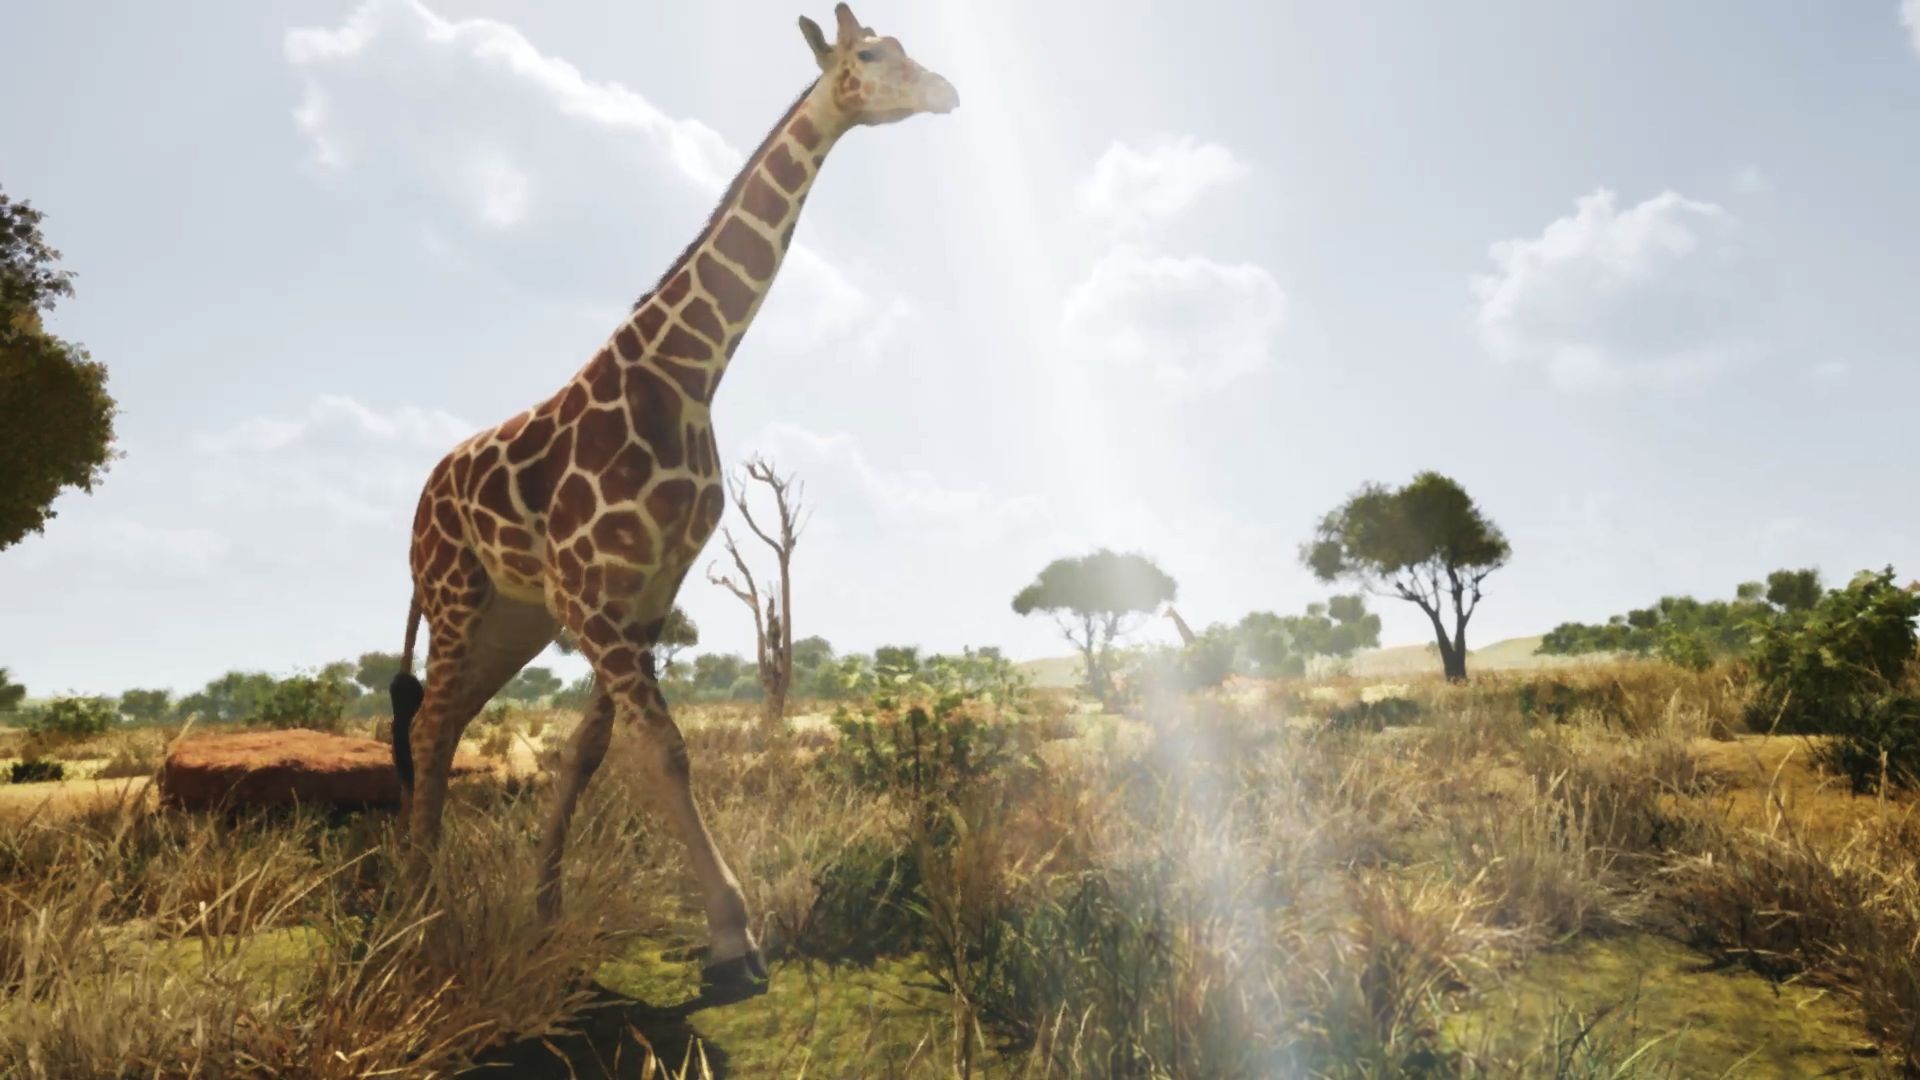 Giraffe Zoo Of The Future Encounter